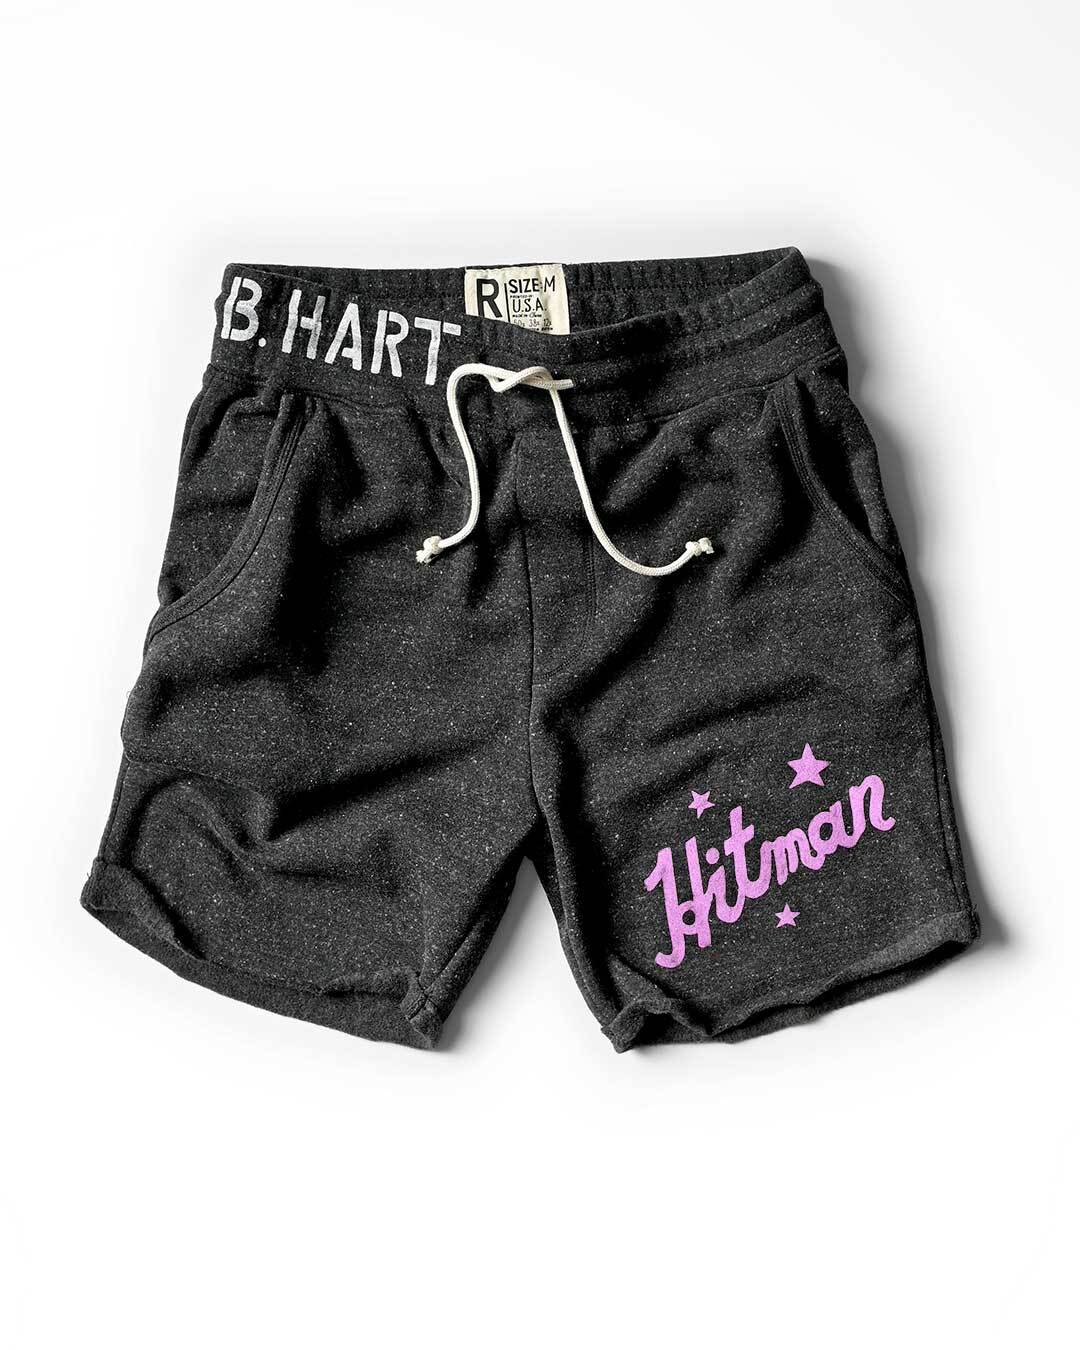 Bret Hart Hitman Black Shorts - Roots of Fight